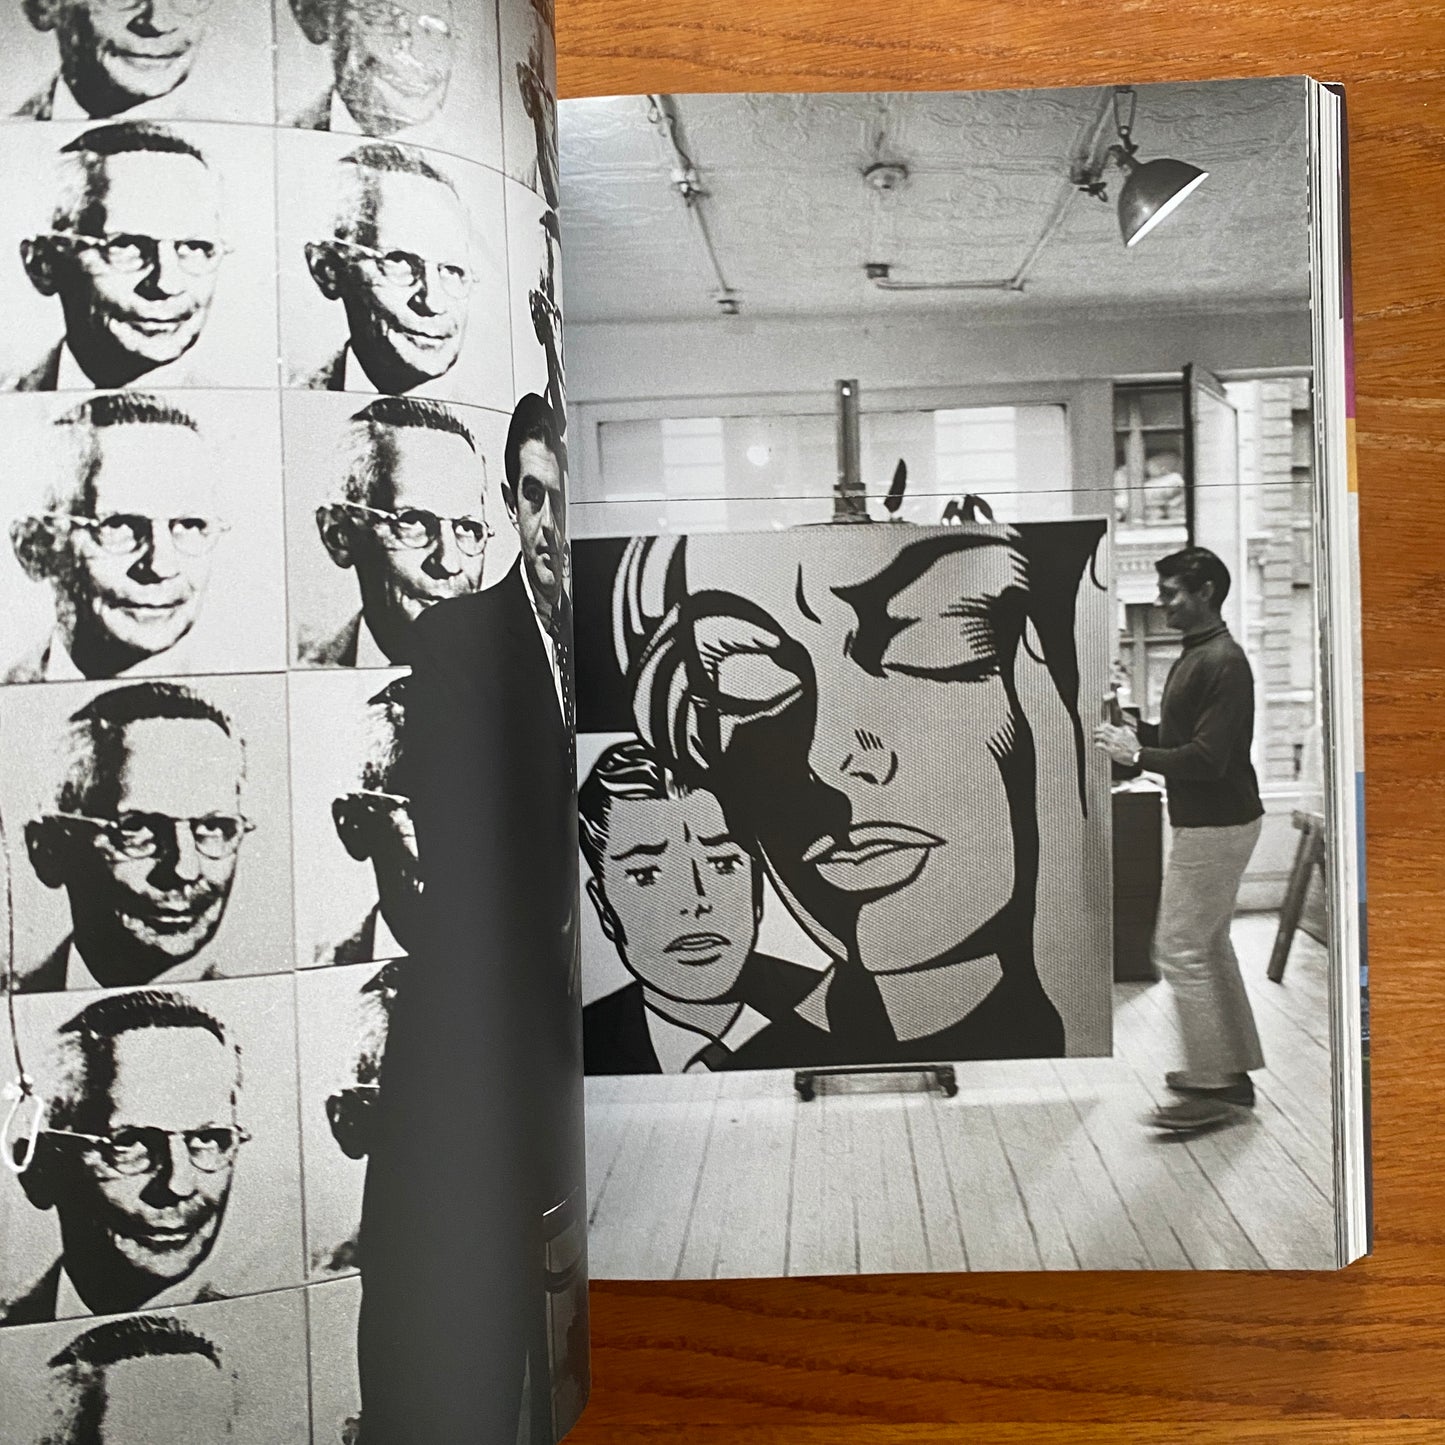 Photographs 1961 - 1967 - Dennis Hopper